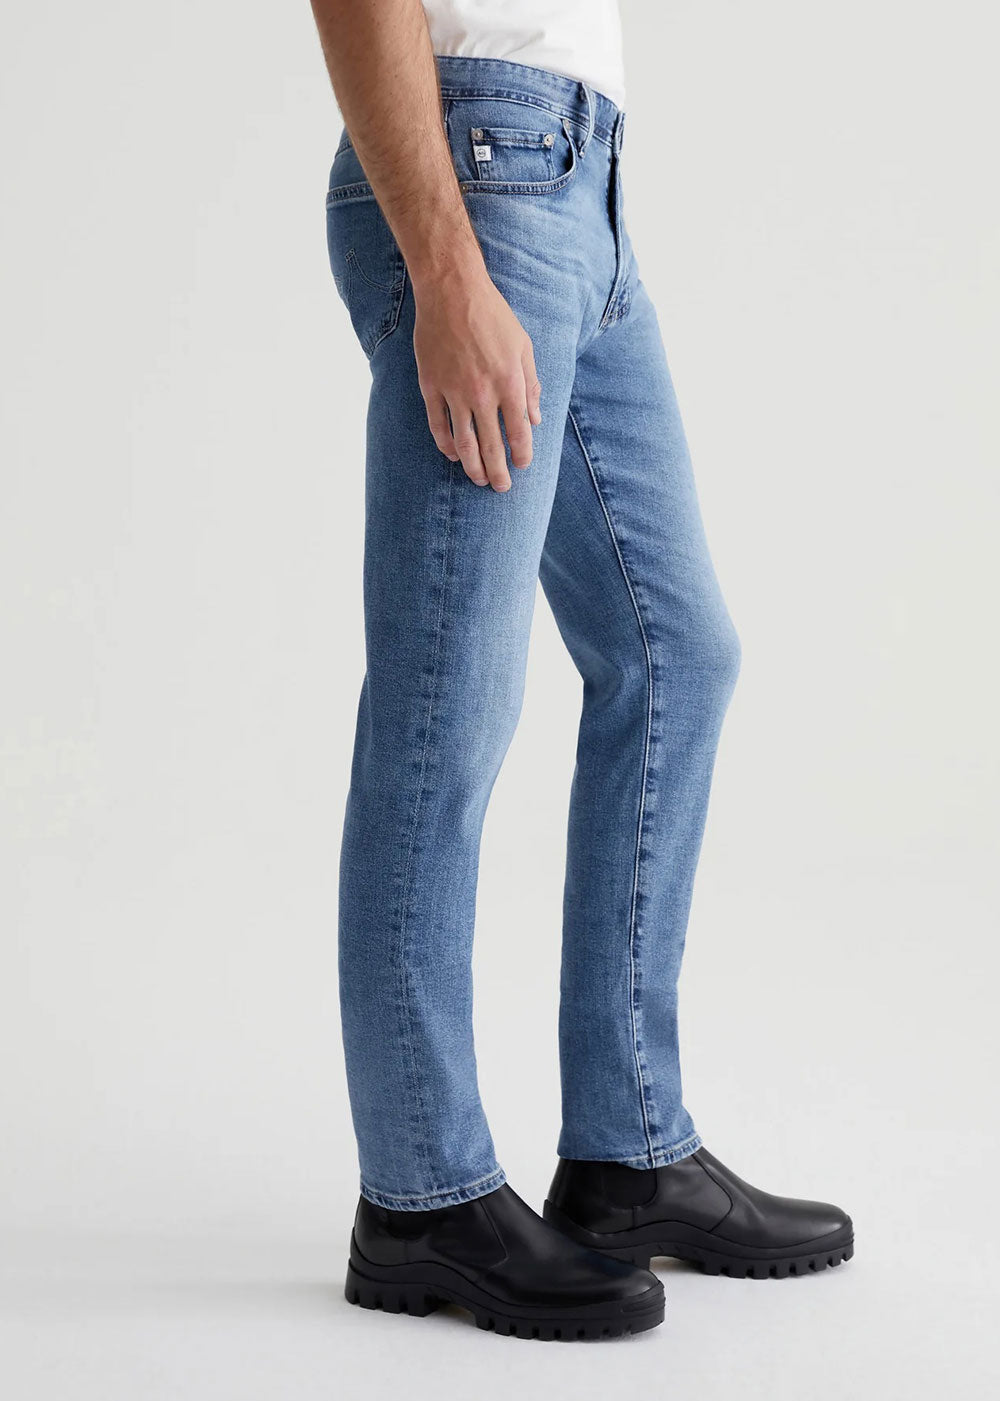 Tellis Modern Slim Jean - Vapor Wash Novo - AG Jeans - Danali - 1783DASNOVO